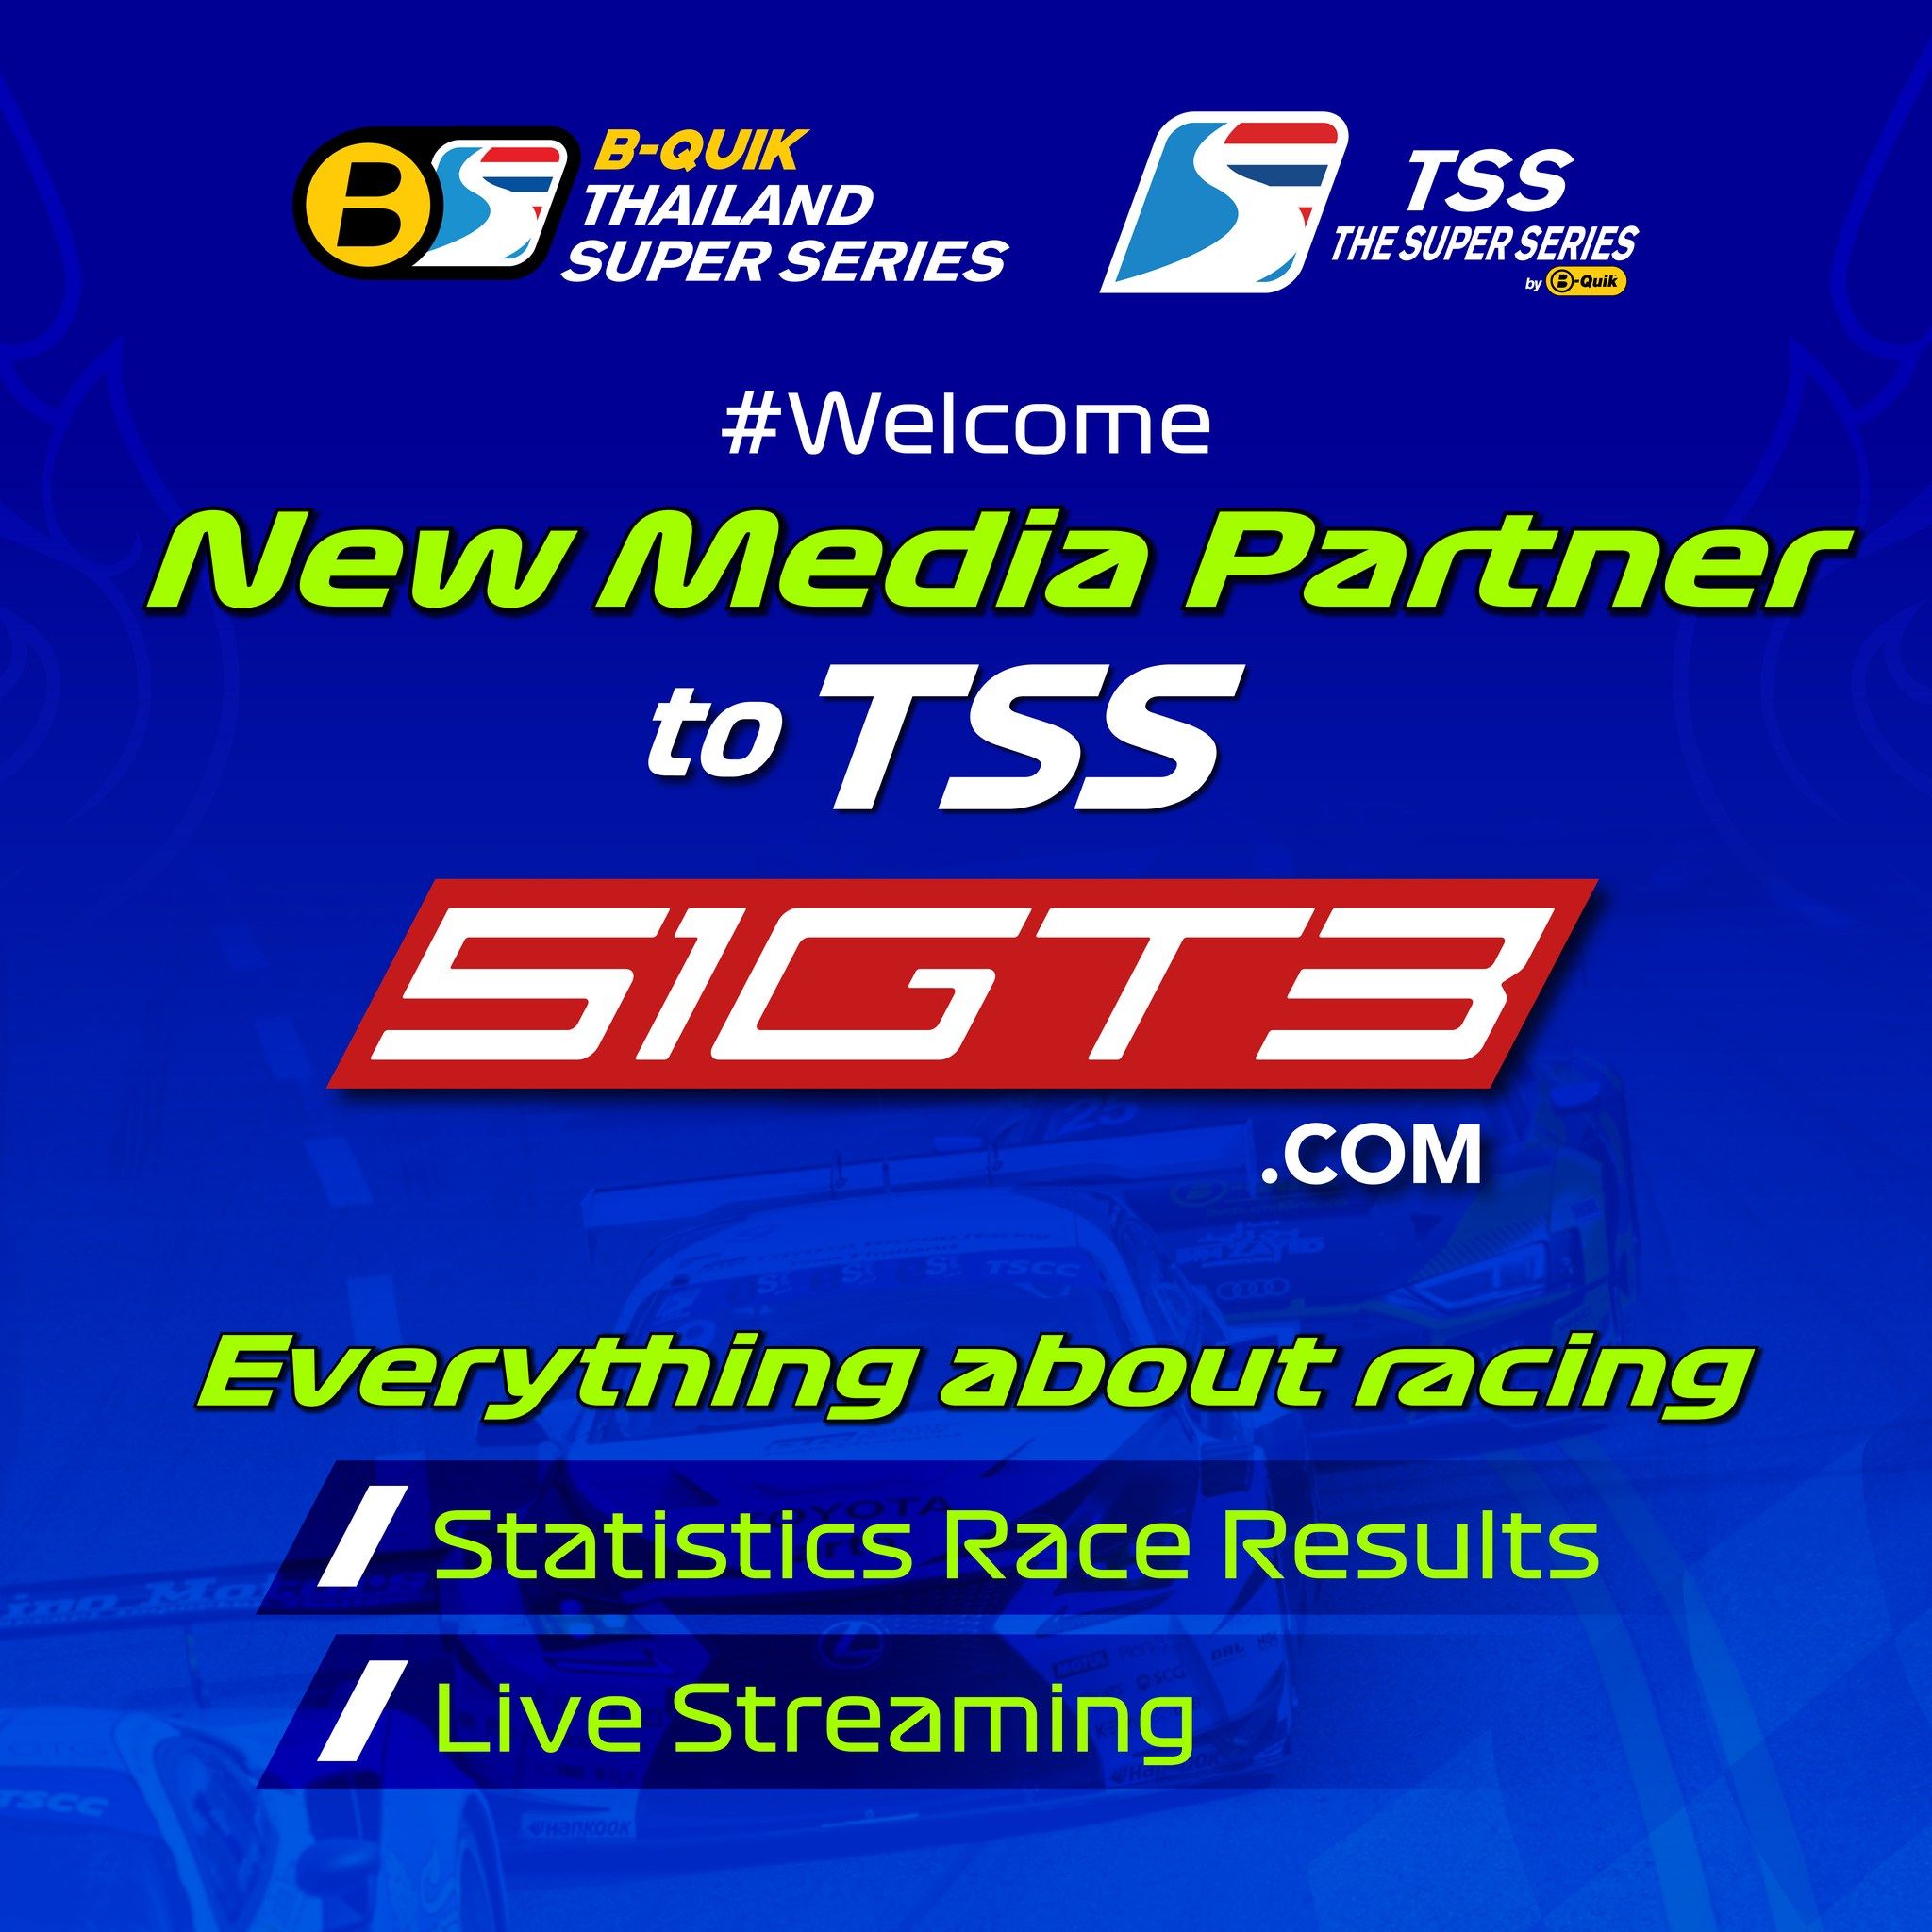 Benvenuto al nuovo media partner di TSS - 51GT3.com